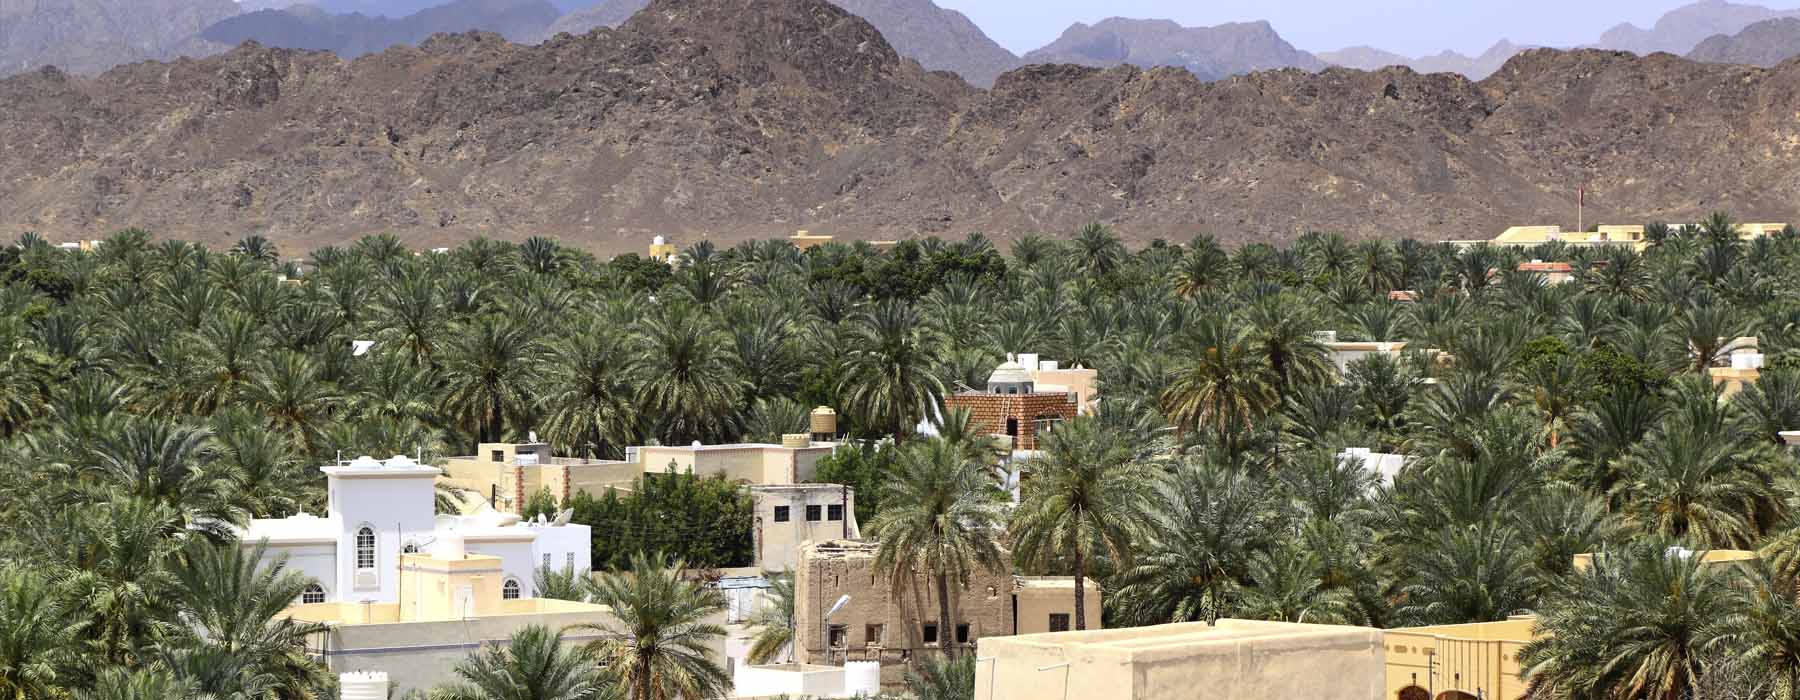 Oman<br class="hidden-md hidden-lg" /> Thanksgiving Vacations